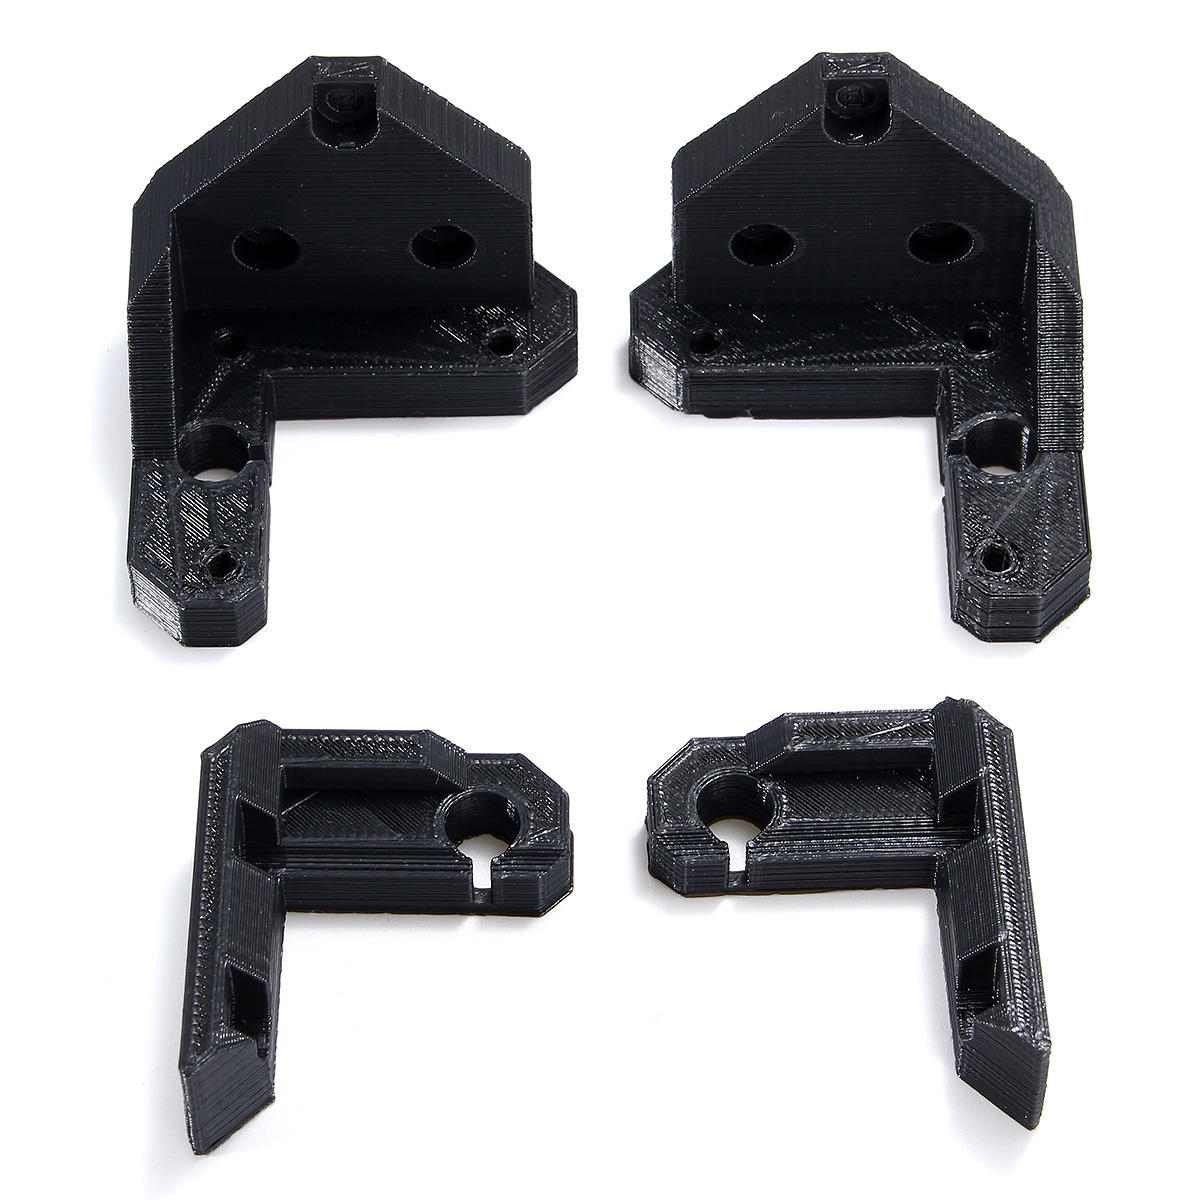 Black-ABS-Filament-Black-3D-Printed-Accessories-Parts-DIY-Kit-For-RepRap-Prusa-i3-3D-Printer-1187085-5